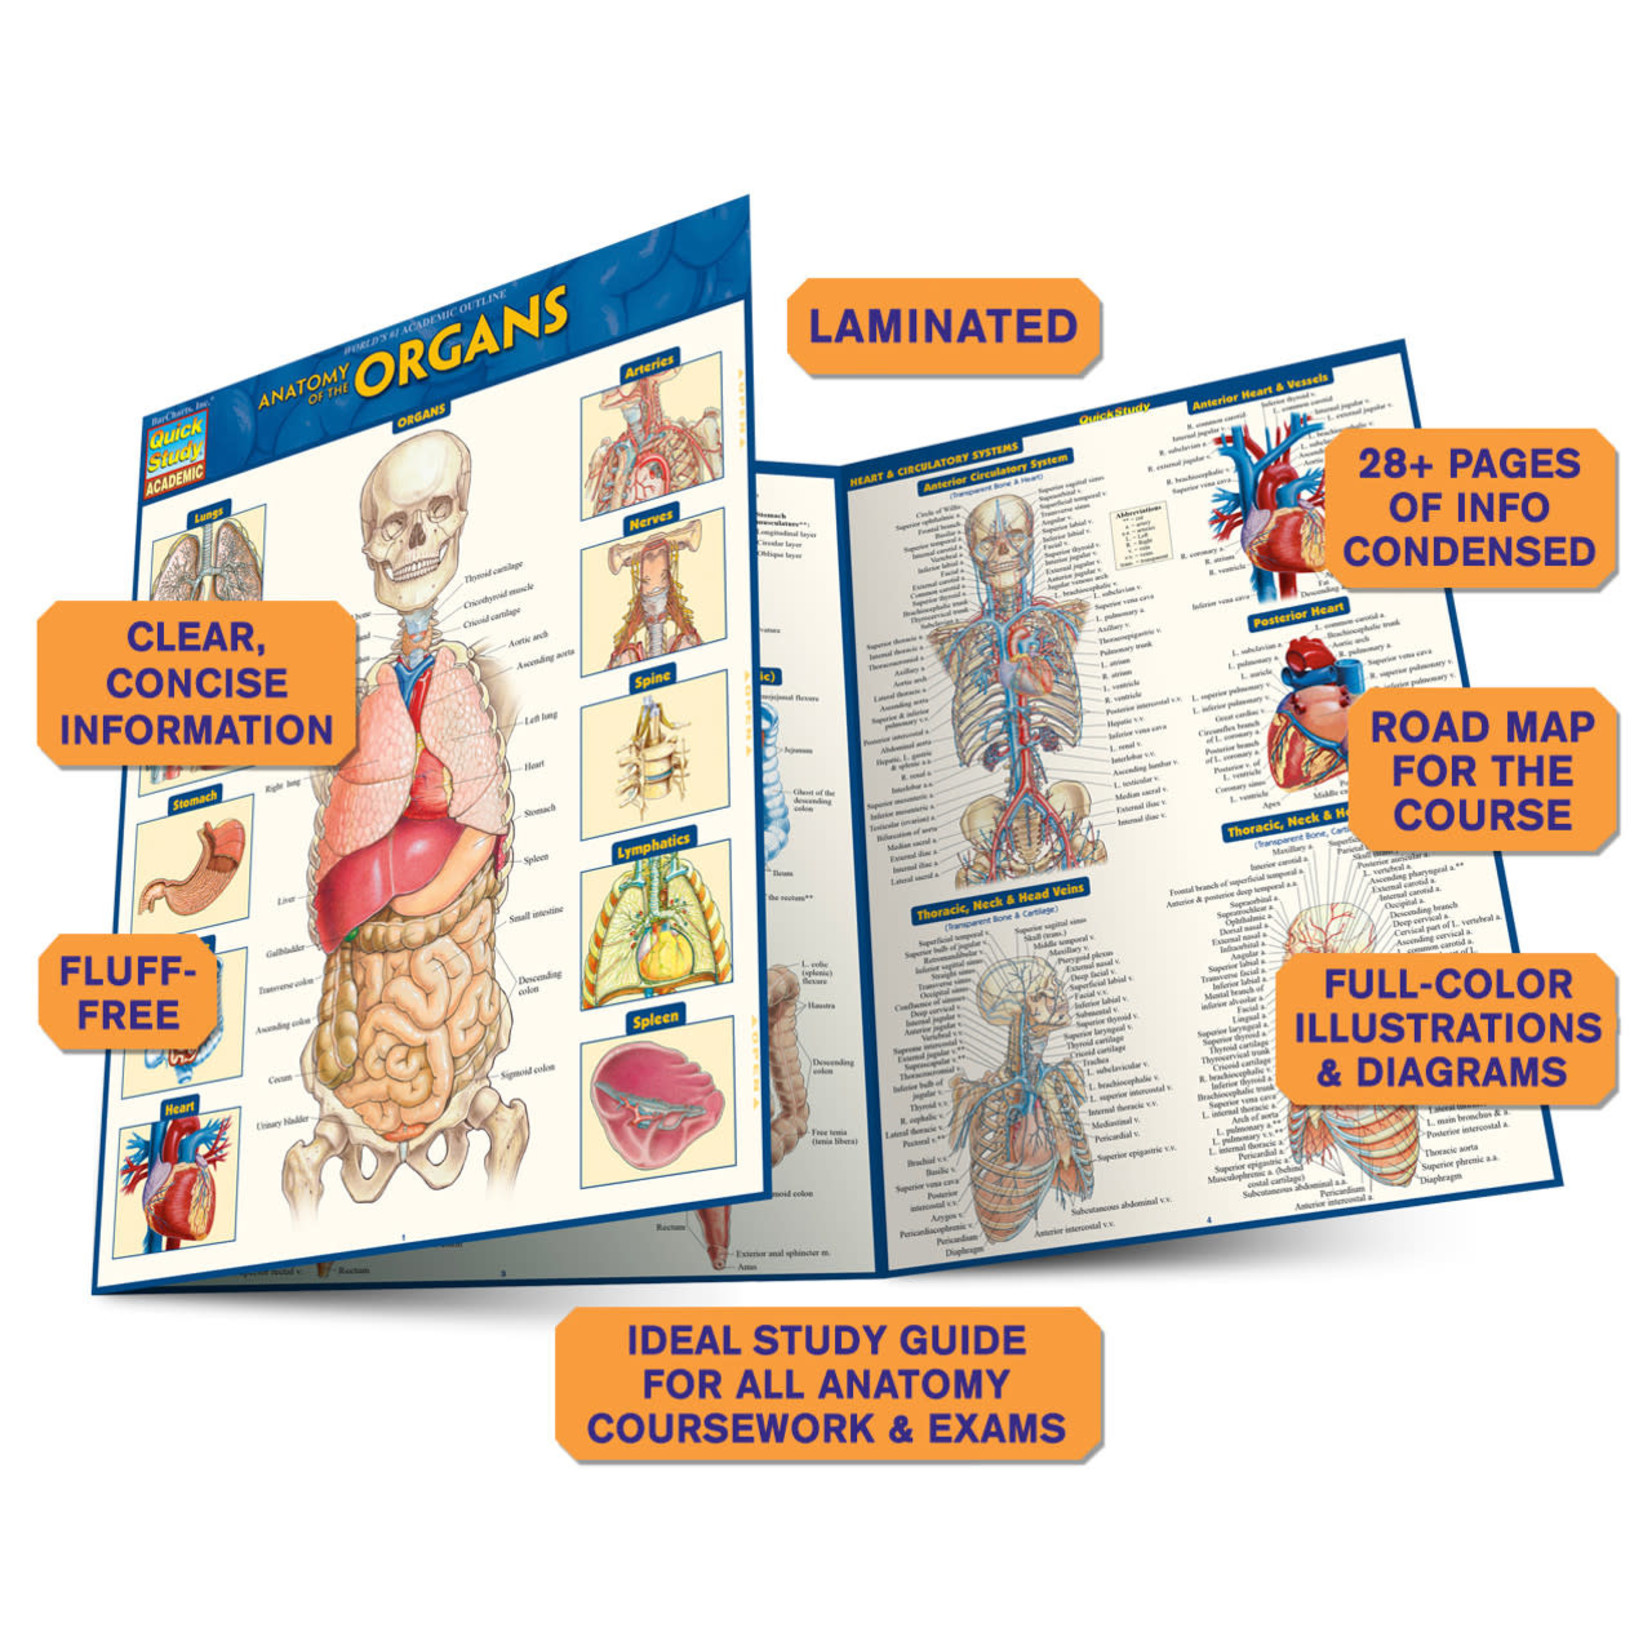 BAR CHARTS QuickStudy | Anatomy of the Organs Laminated Study Guide